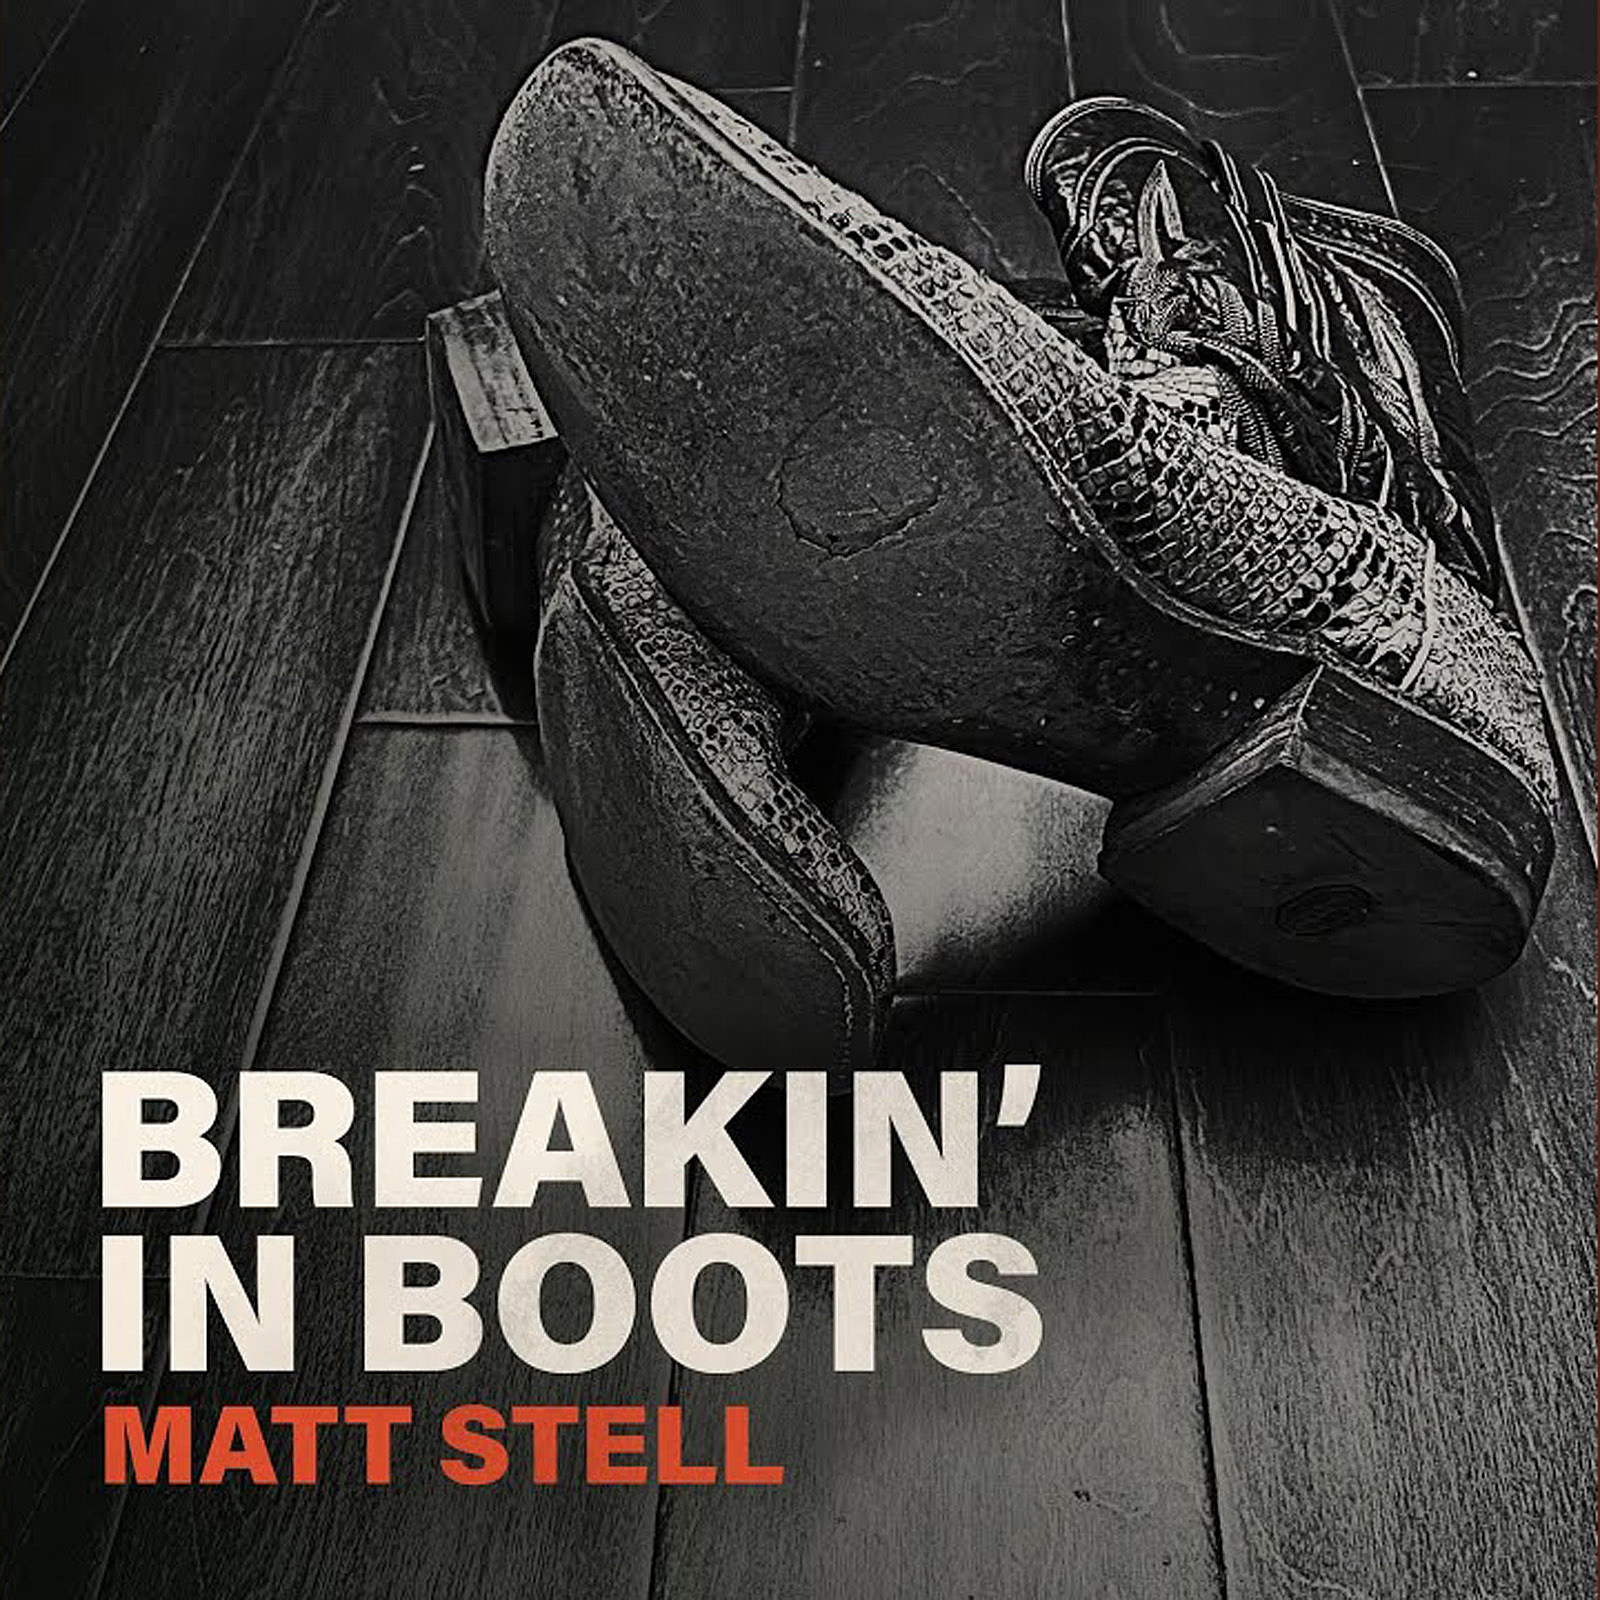 Matt Stell Says New Song 'Breakin' in Boots' Begins a New Era